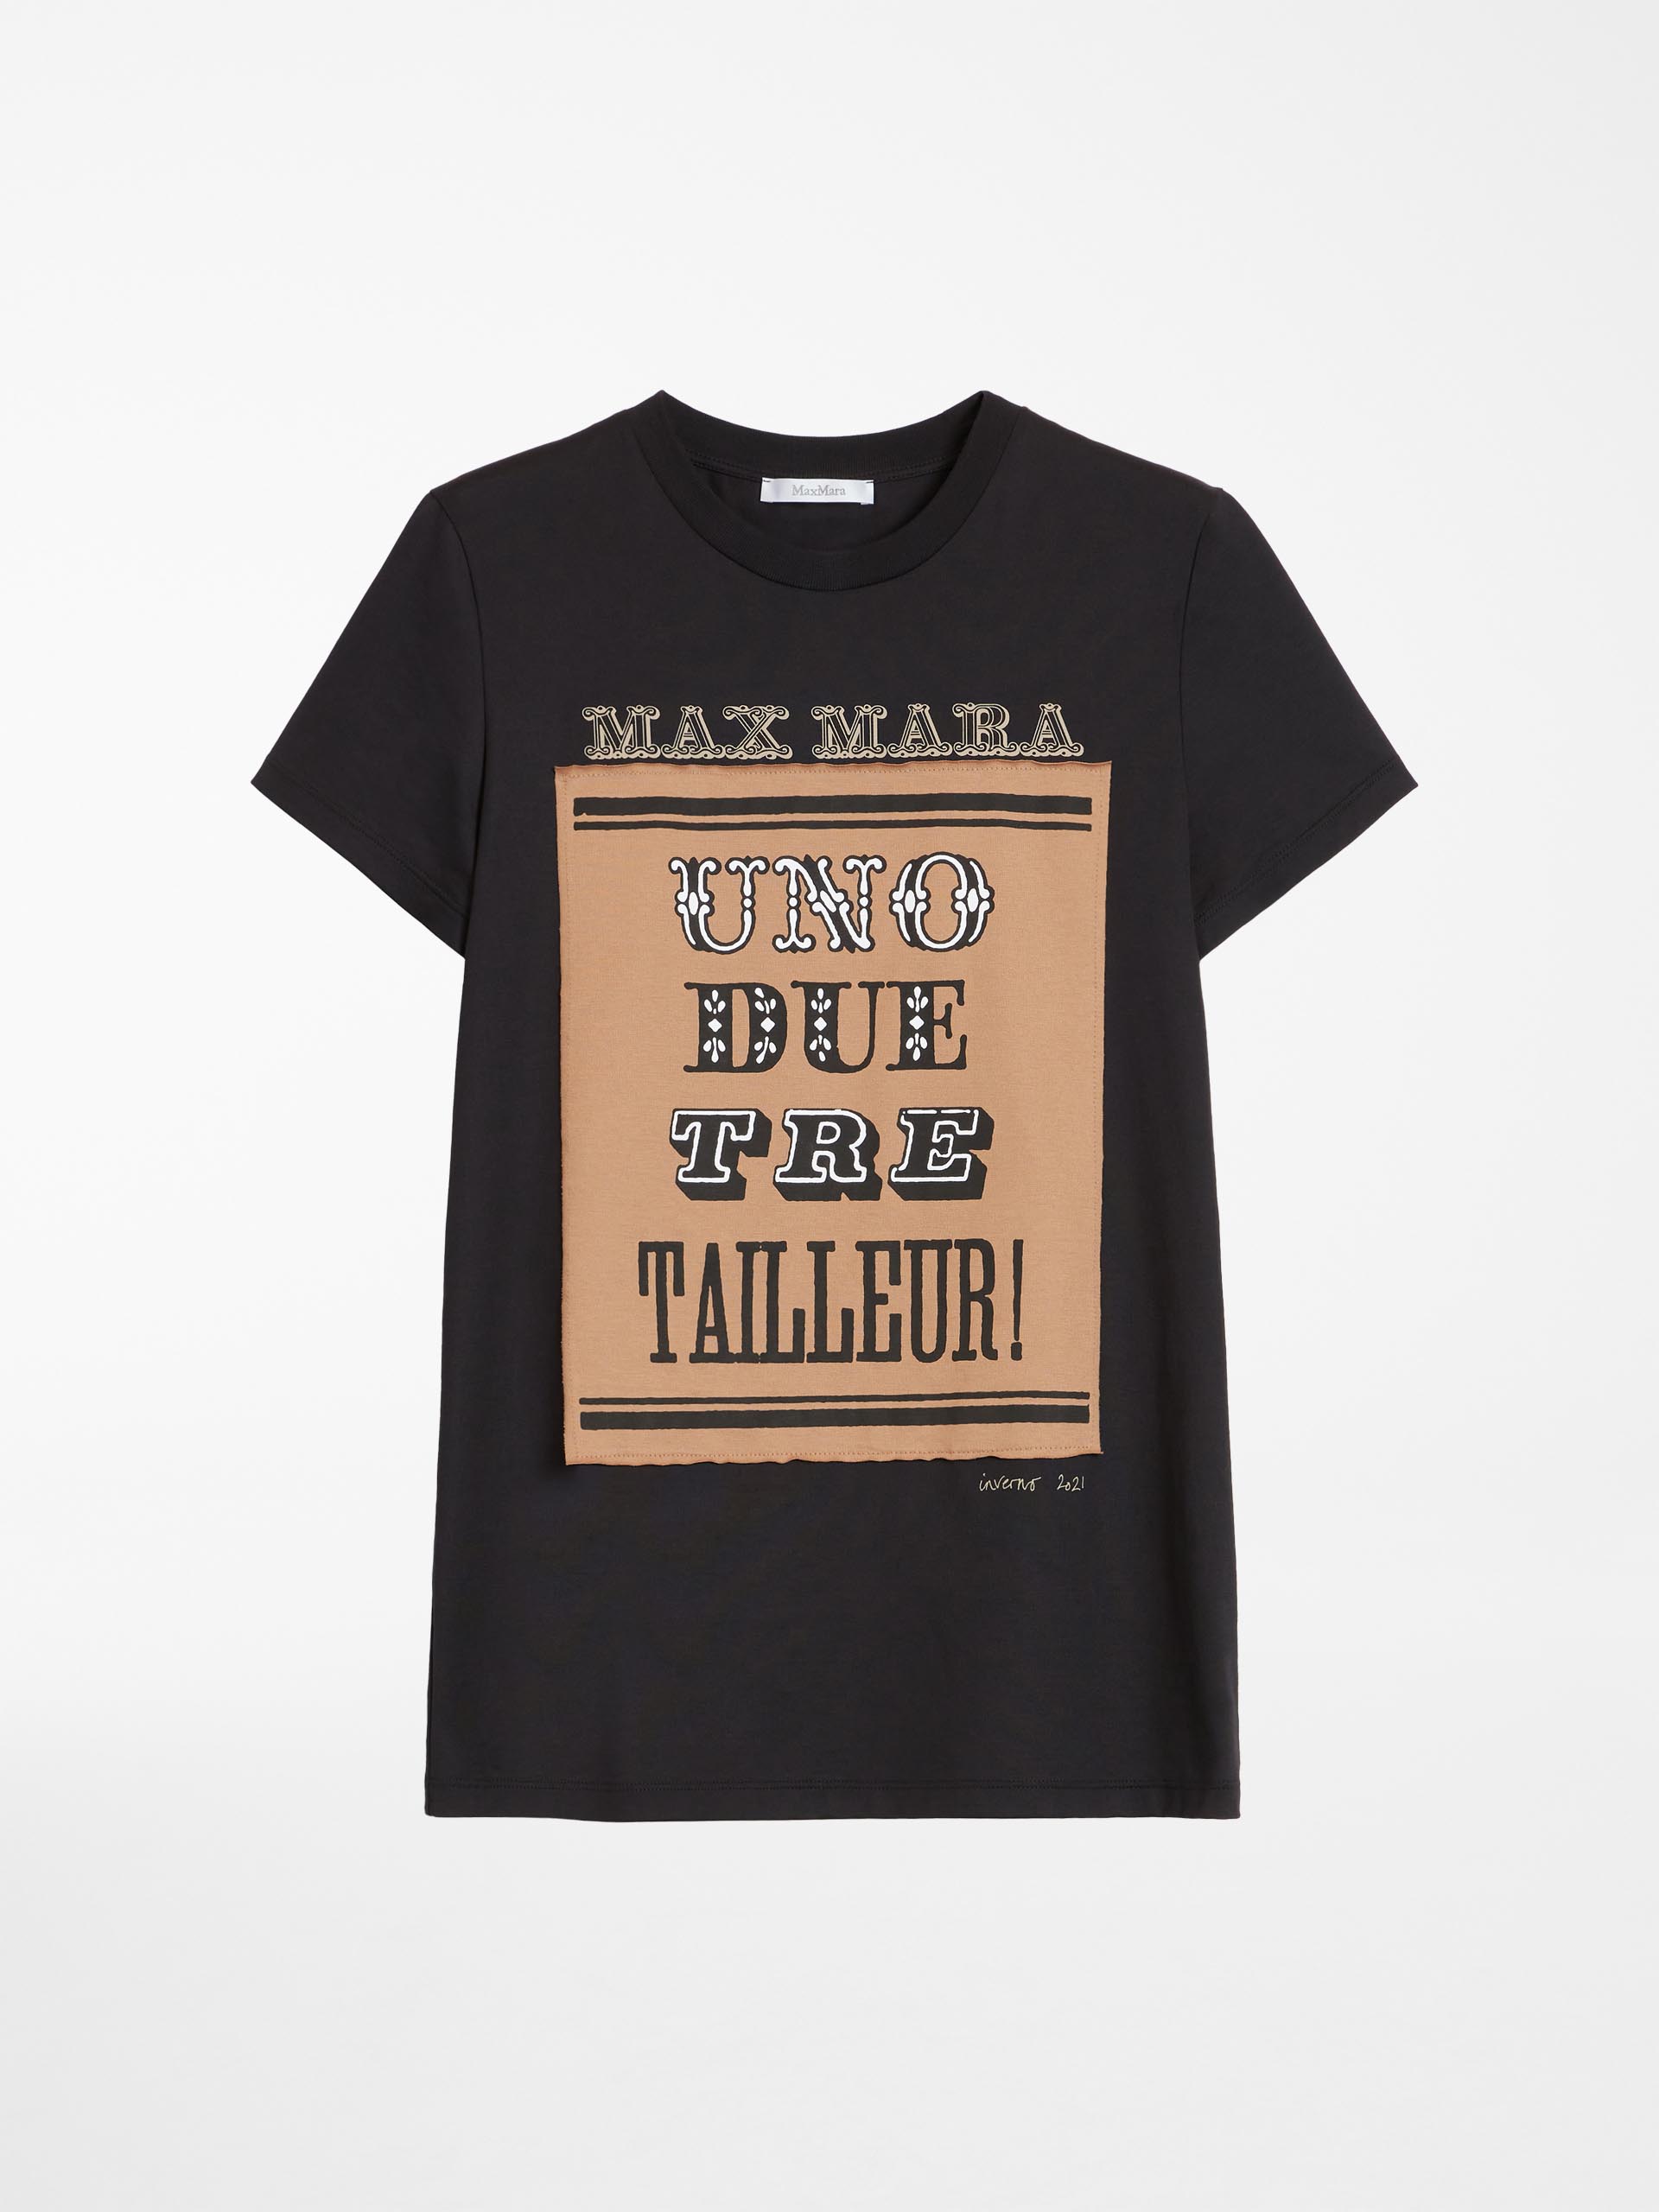 , 7 for 70! Max Mara Anniversary T-Shirts!